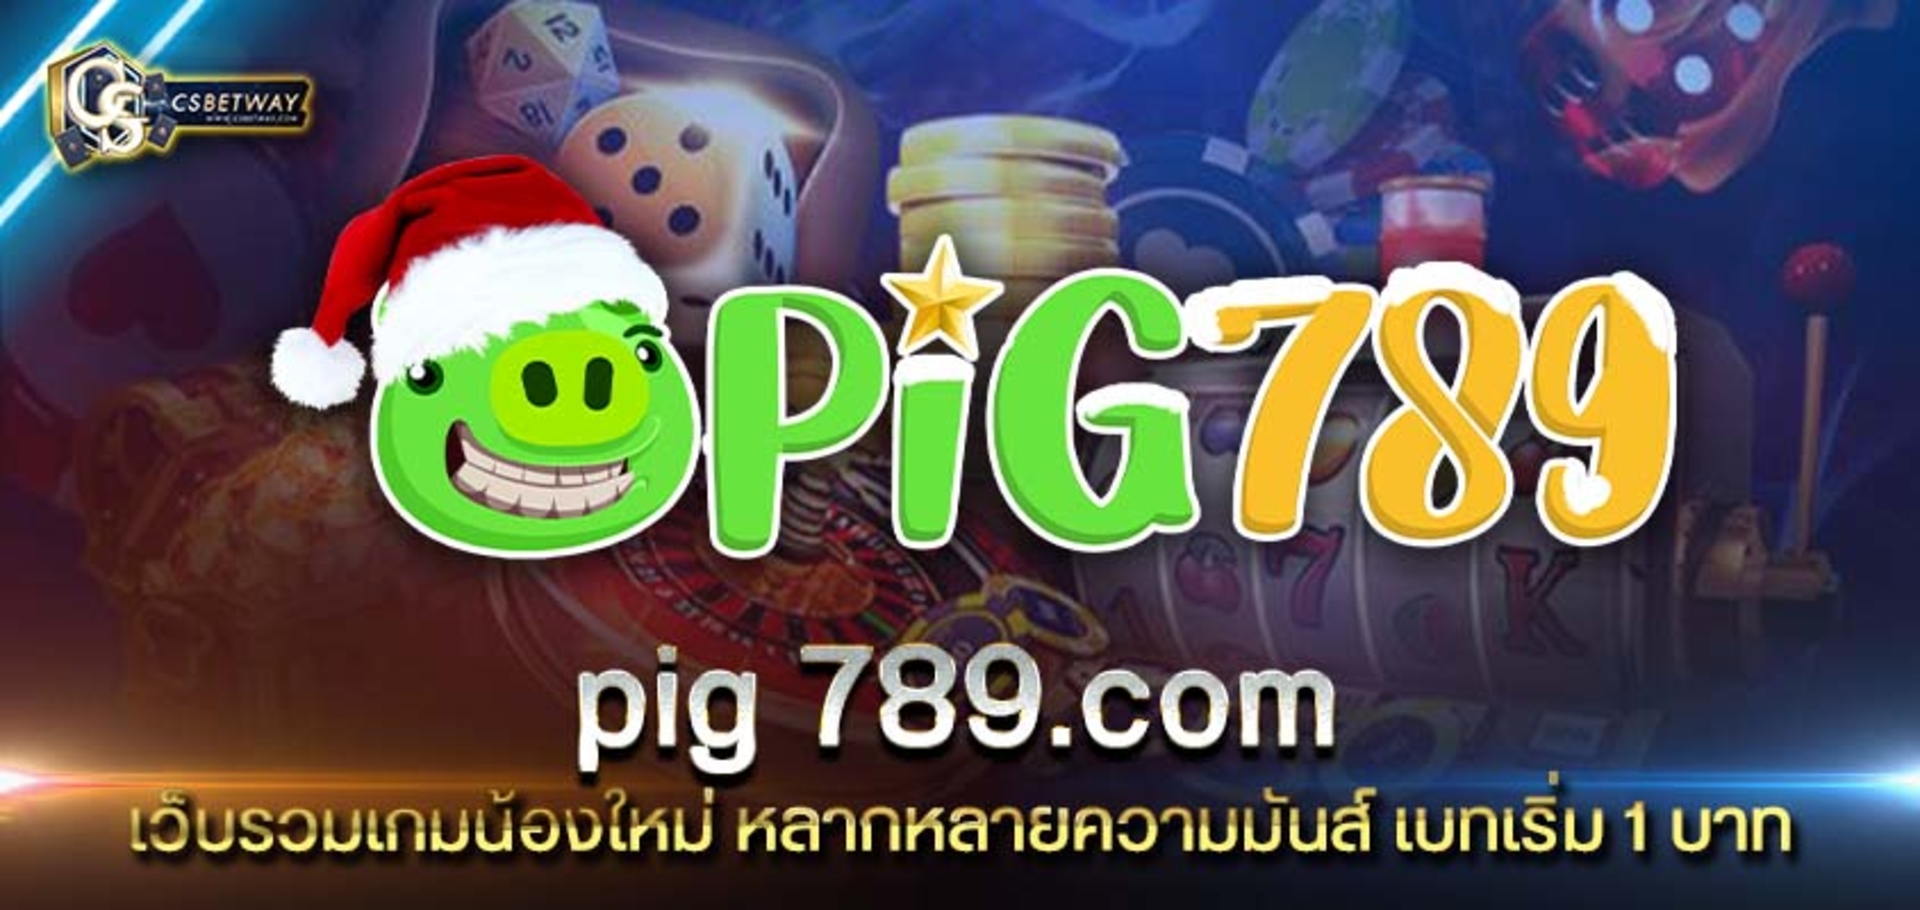 pig 789.com เว็บรวมเกมน้องใหม่ หลากหลายความมันส์ เบทเริ่ม 1 บาท